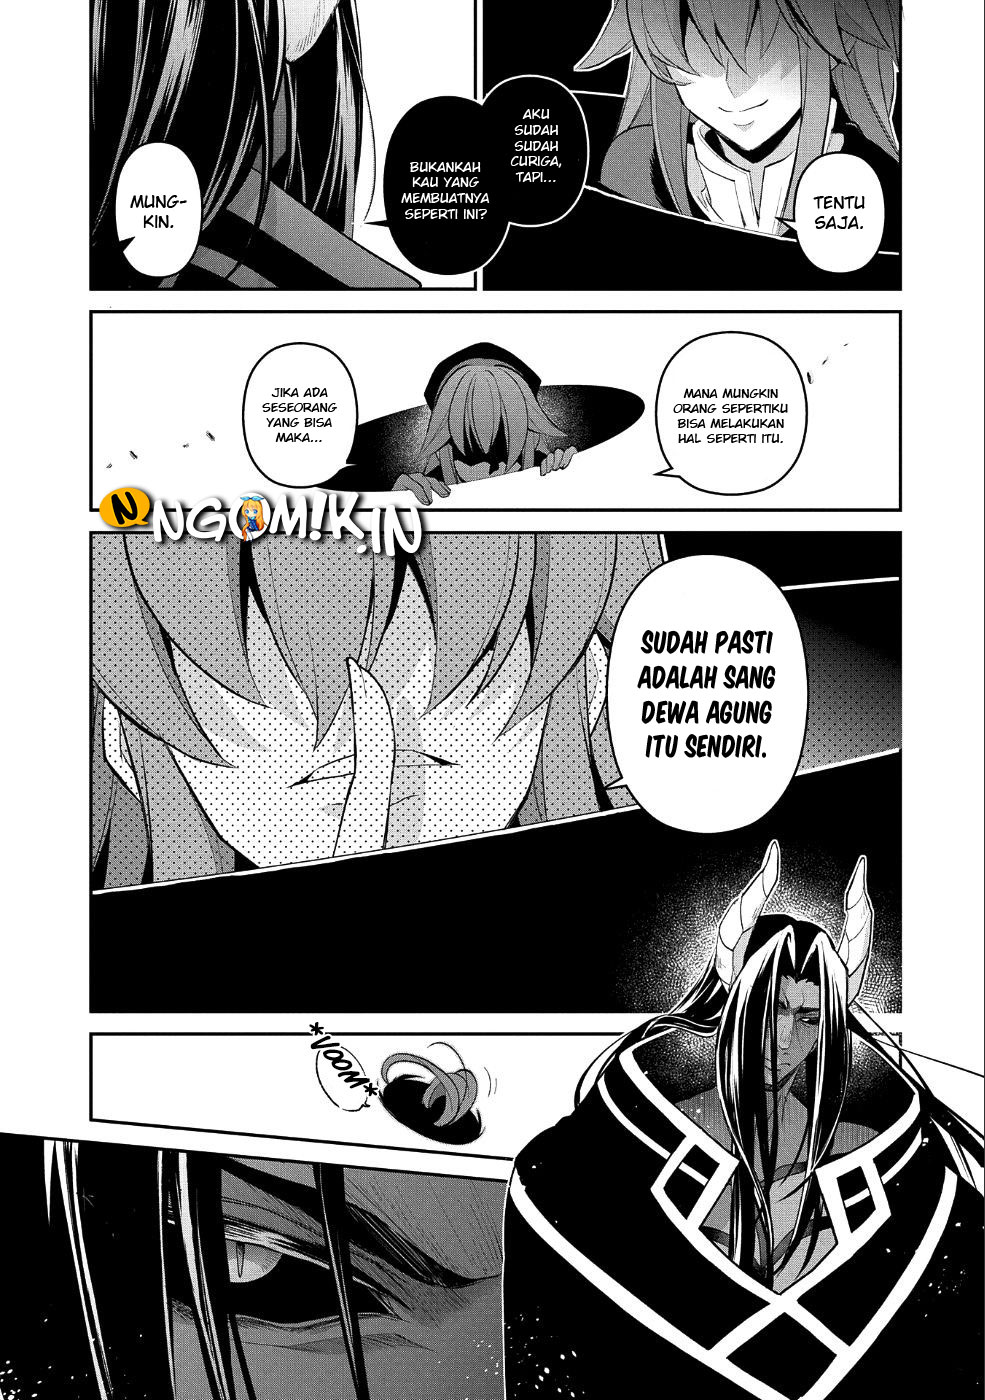 Yasei no Last Boss ga Arawareta! Chapter 19